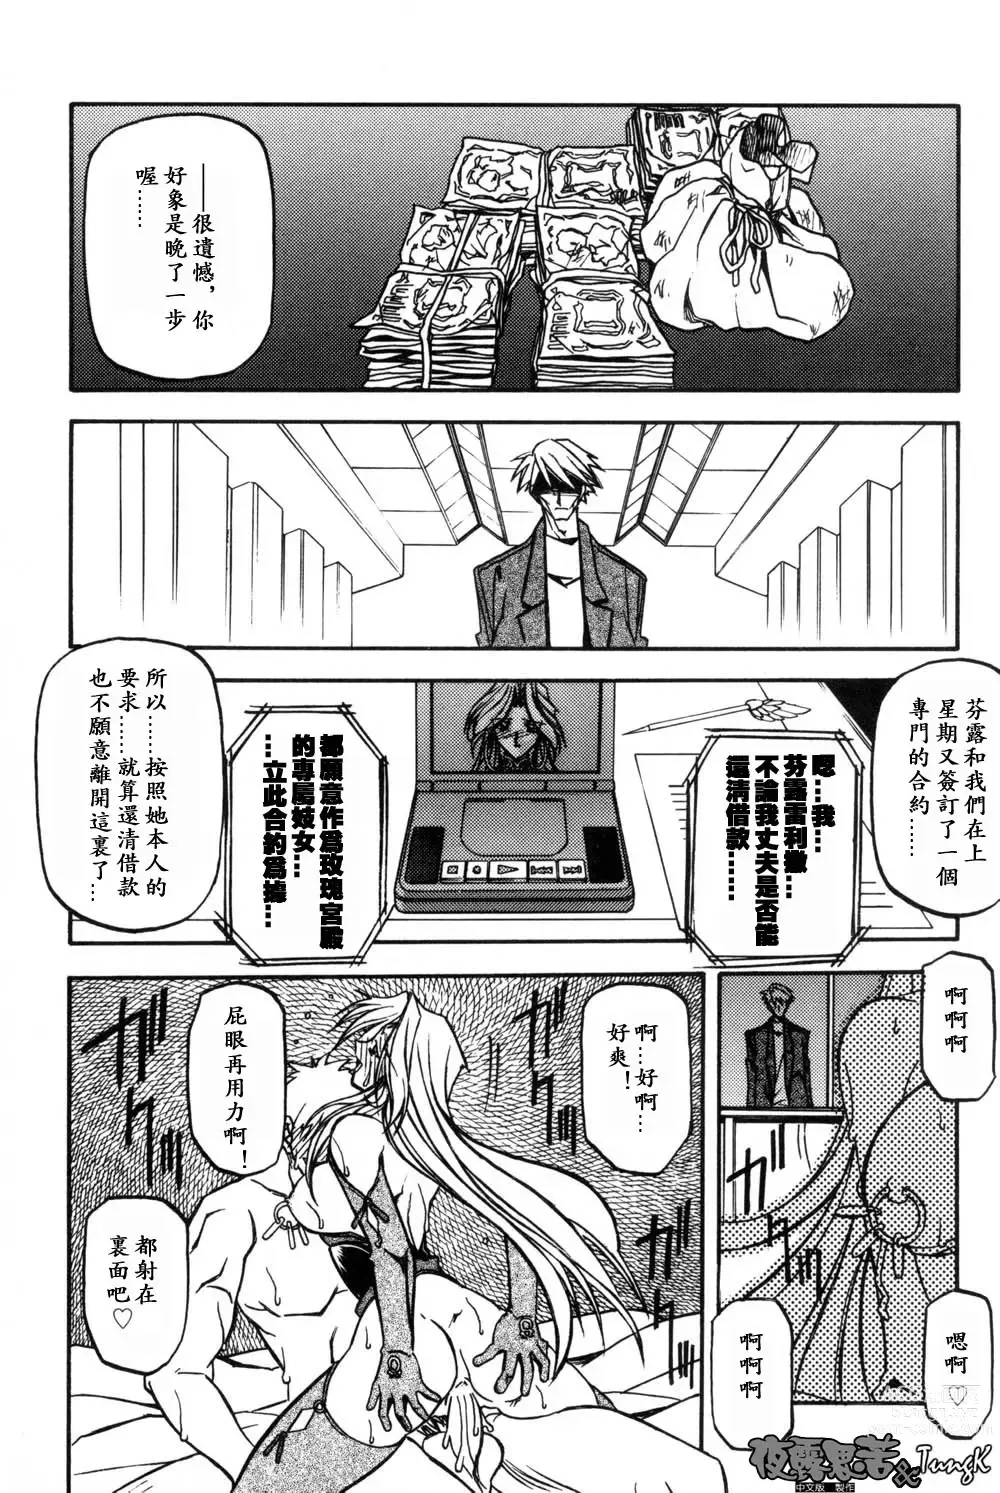 Page 174 of manga 沒有窗戶的小屋